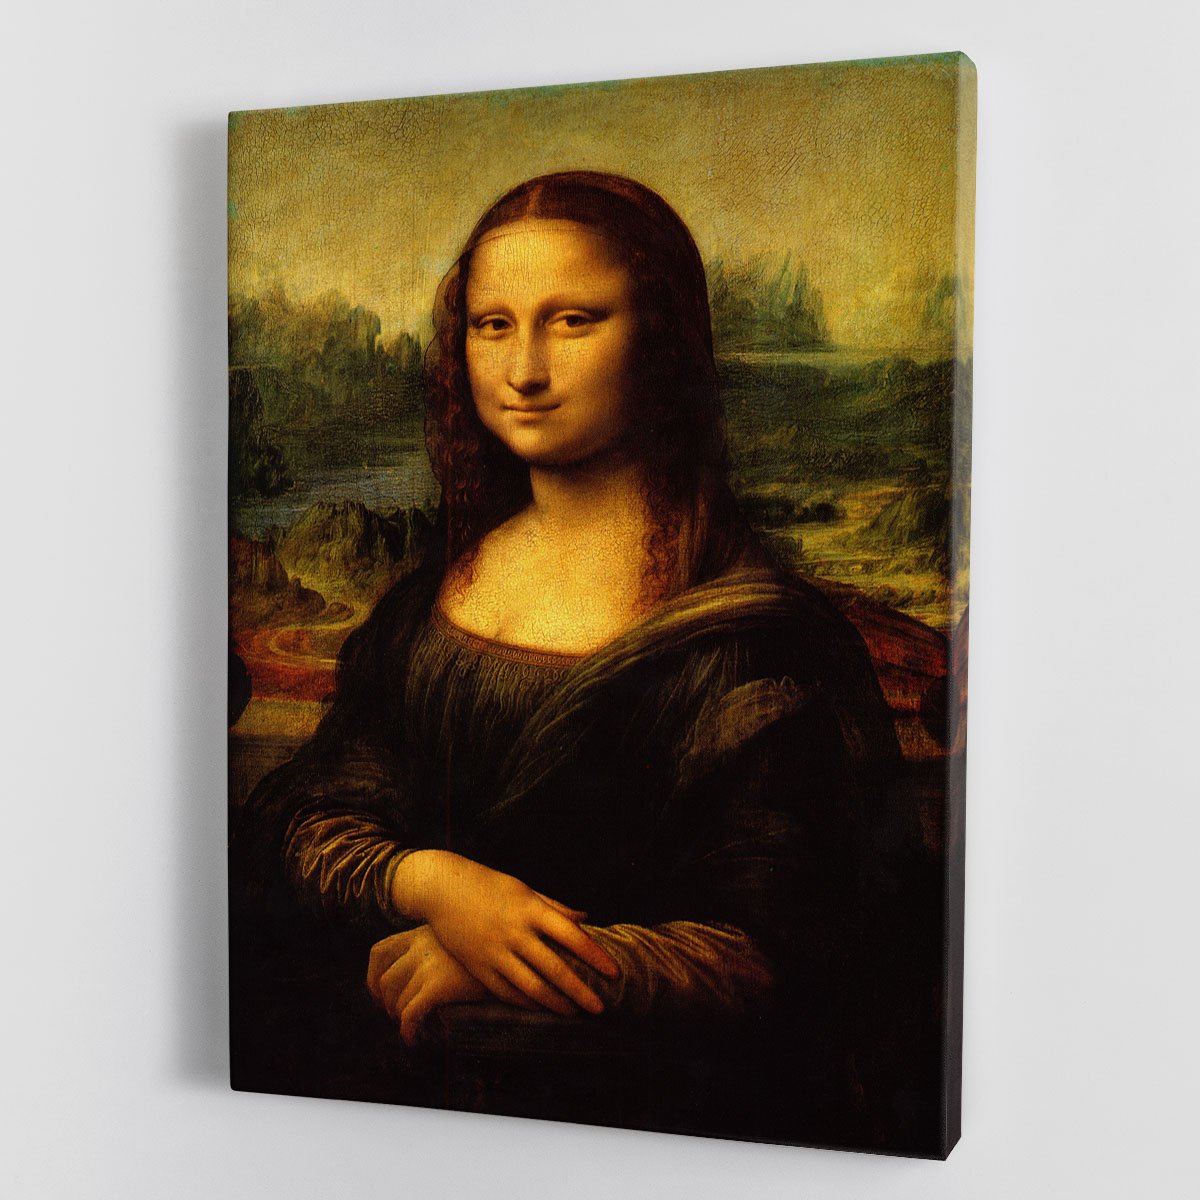 Mona Lisa by Da Vinci Canvas Print or Poster